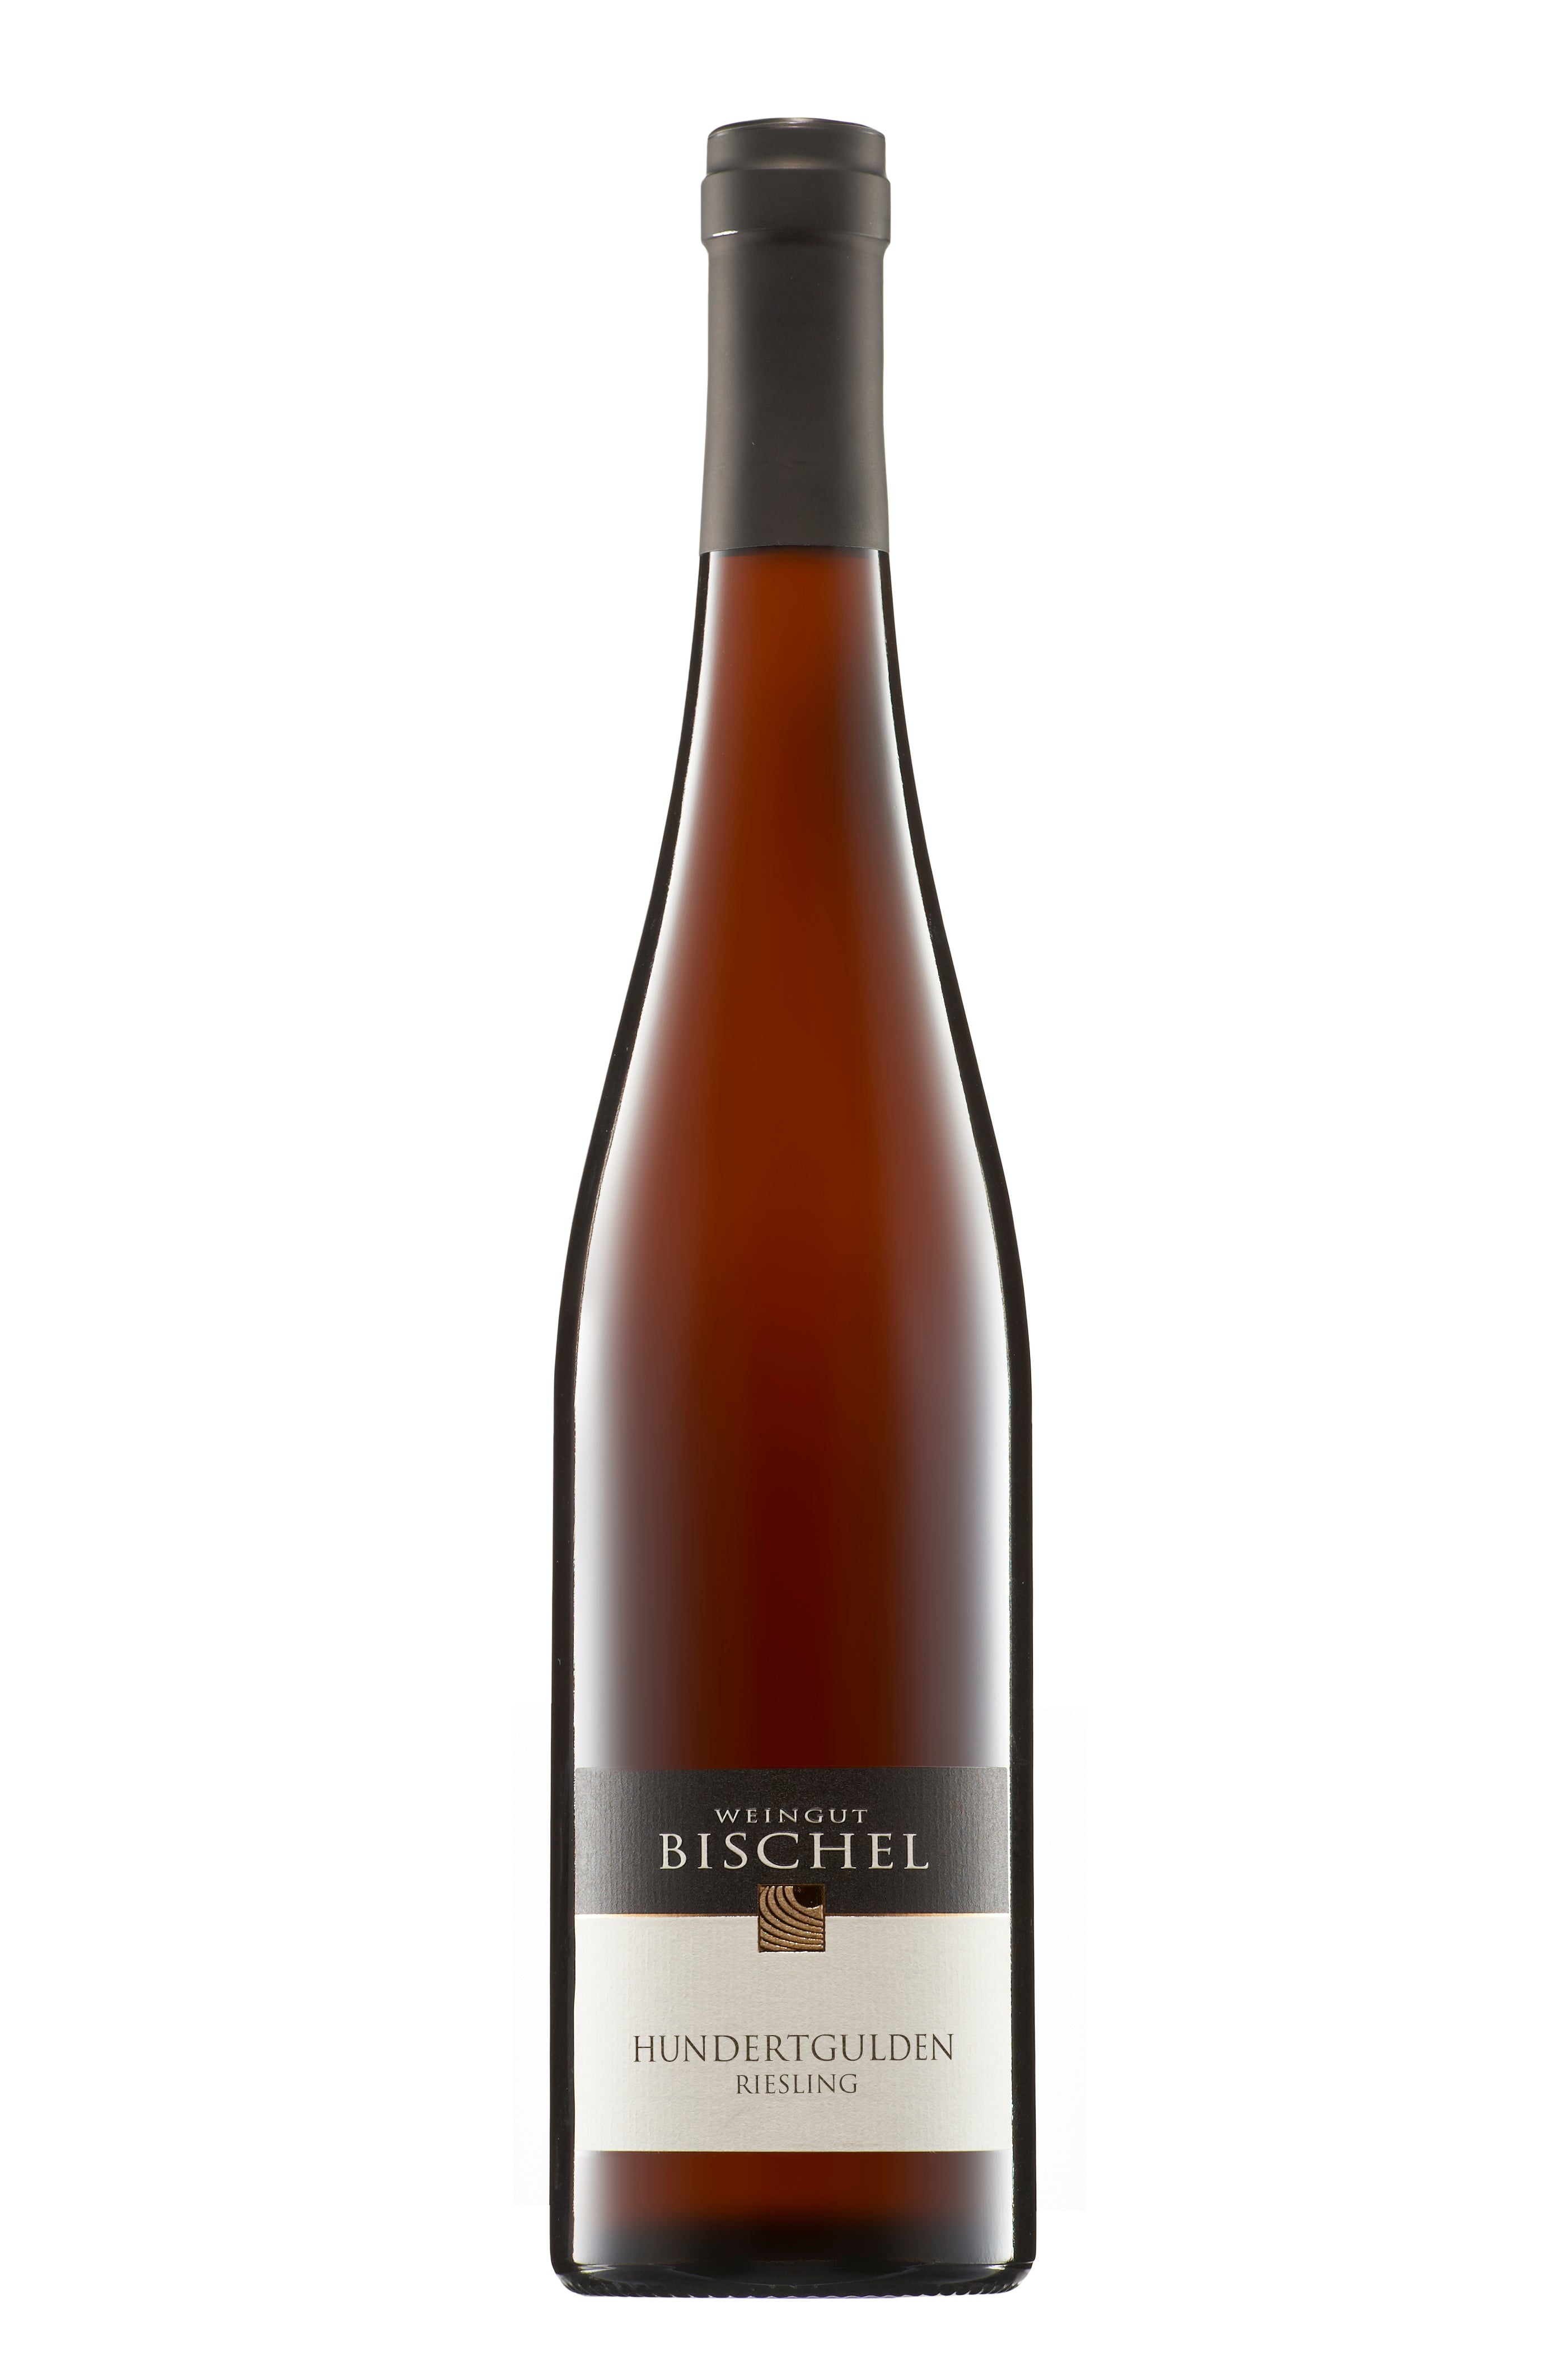 Bischel 2017 Appenheimer Hundertgulden Riesling dry white wine